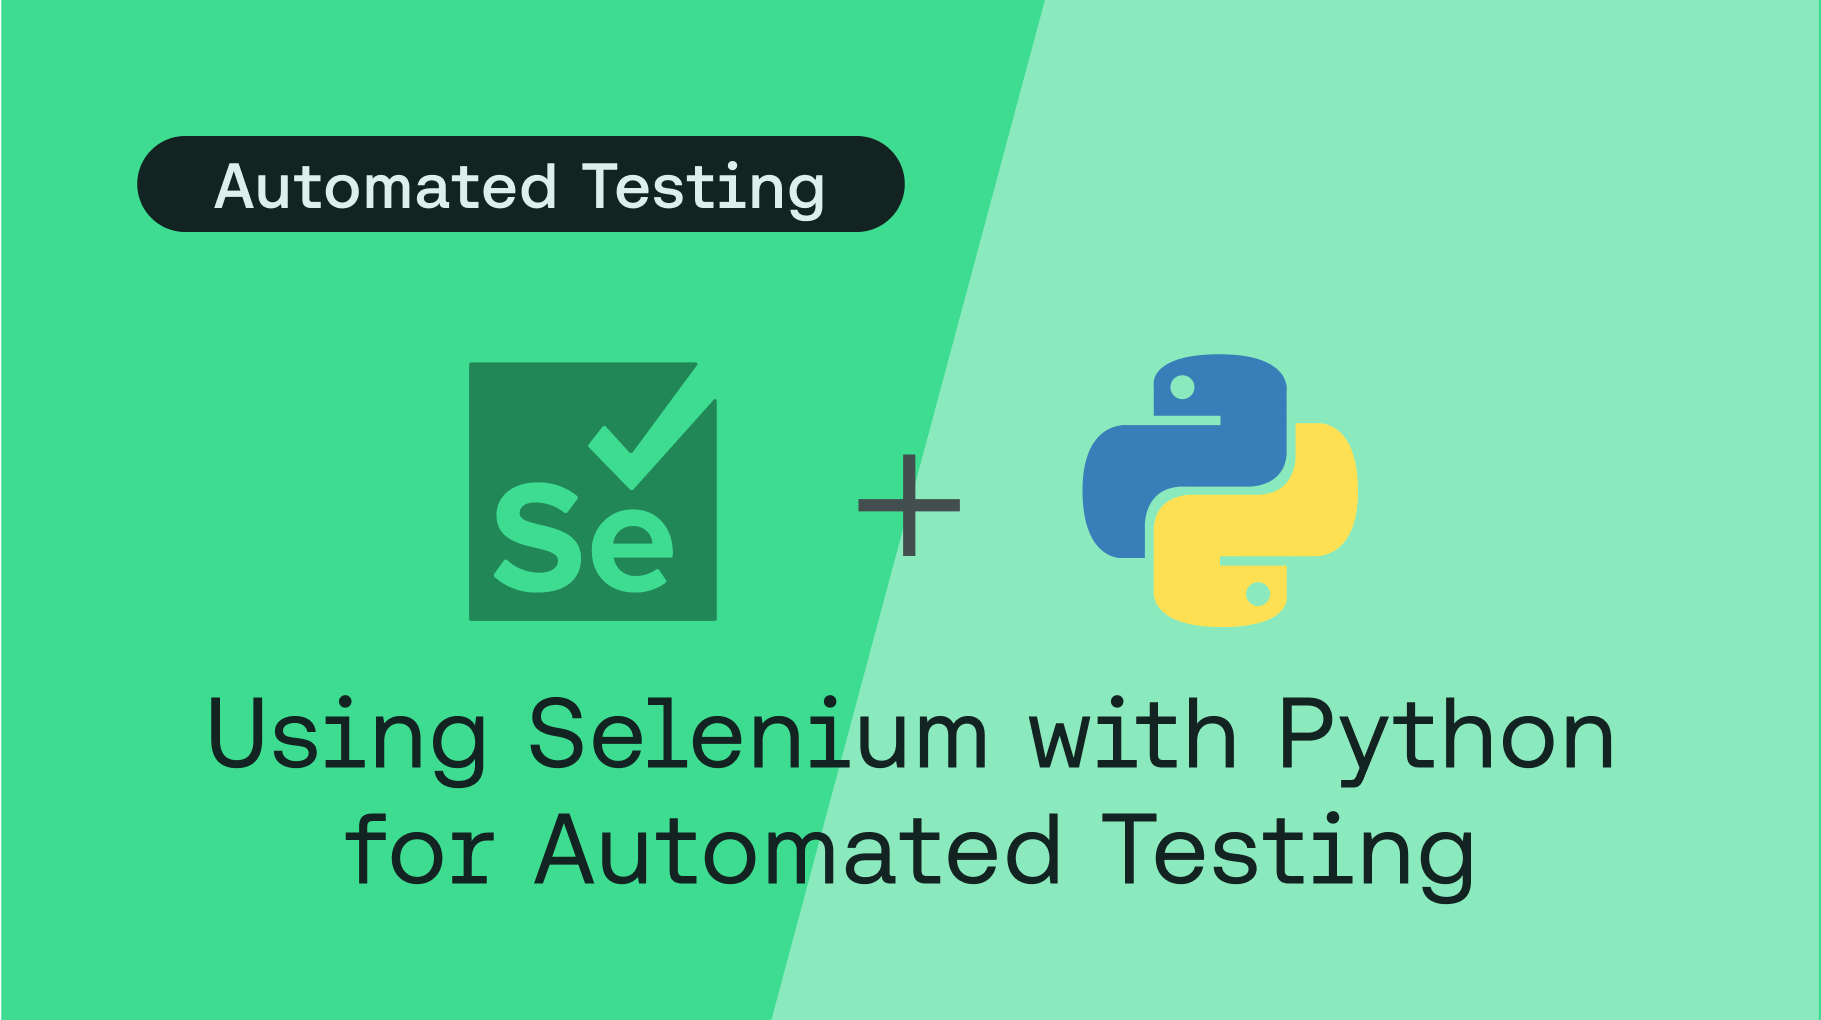 Selenium Python Tutorial For Automated Testing